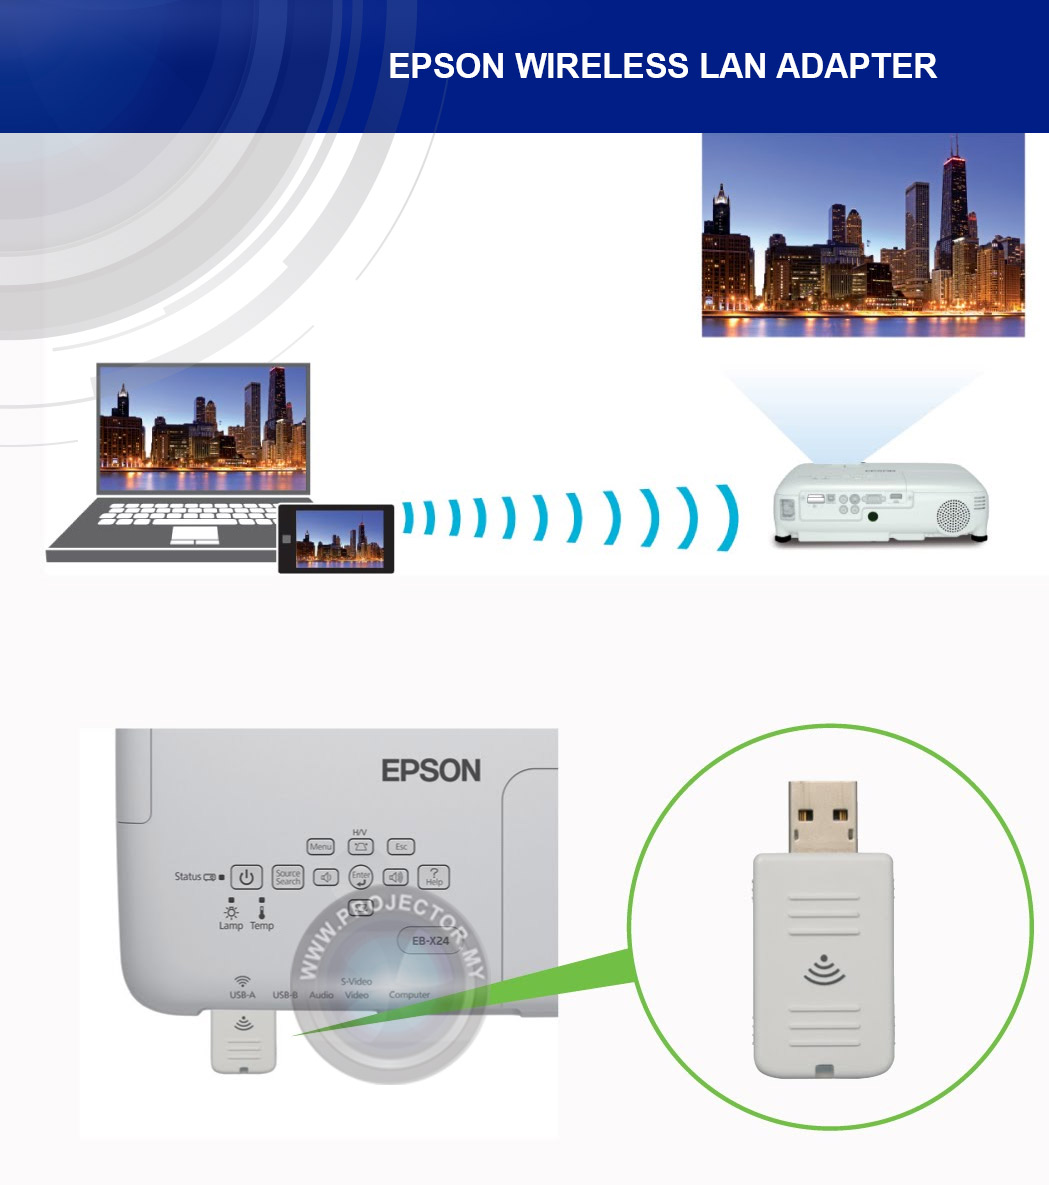 elpap10 wireless presentation system